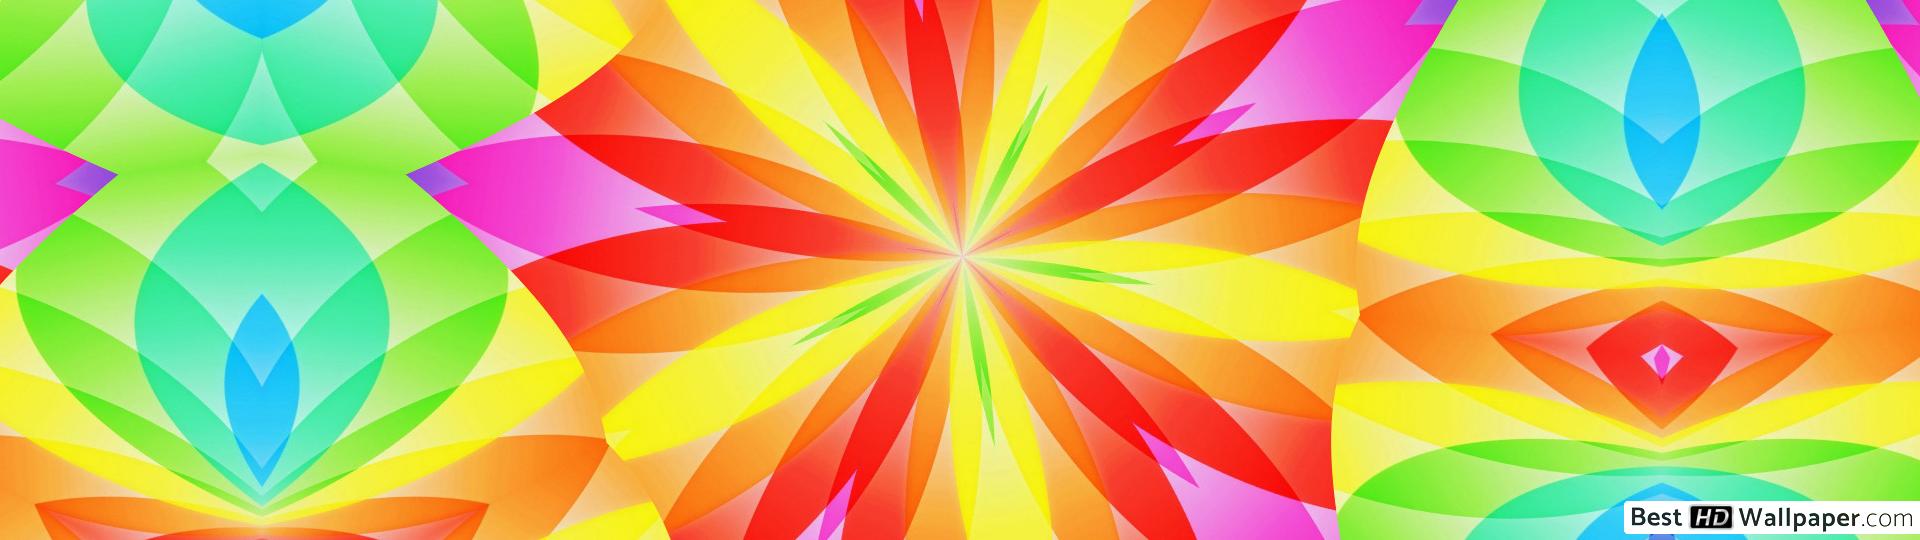 Colorful Kaleidoscope HD wallpaper download